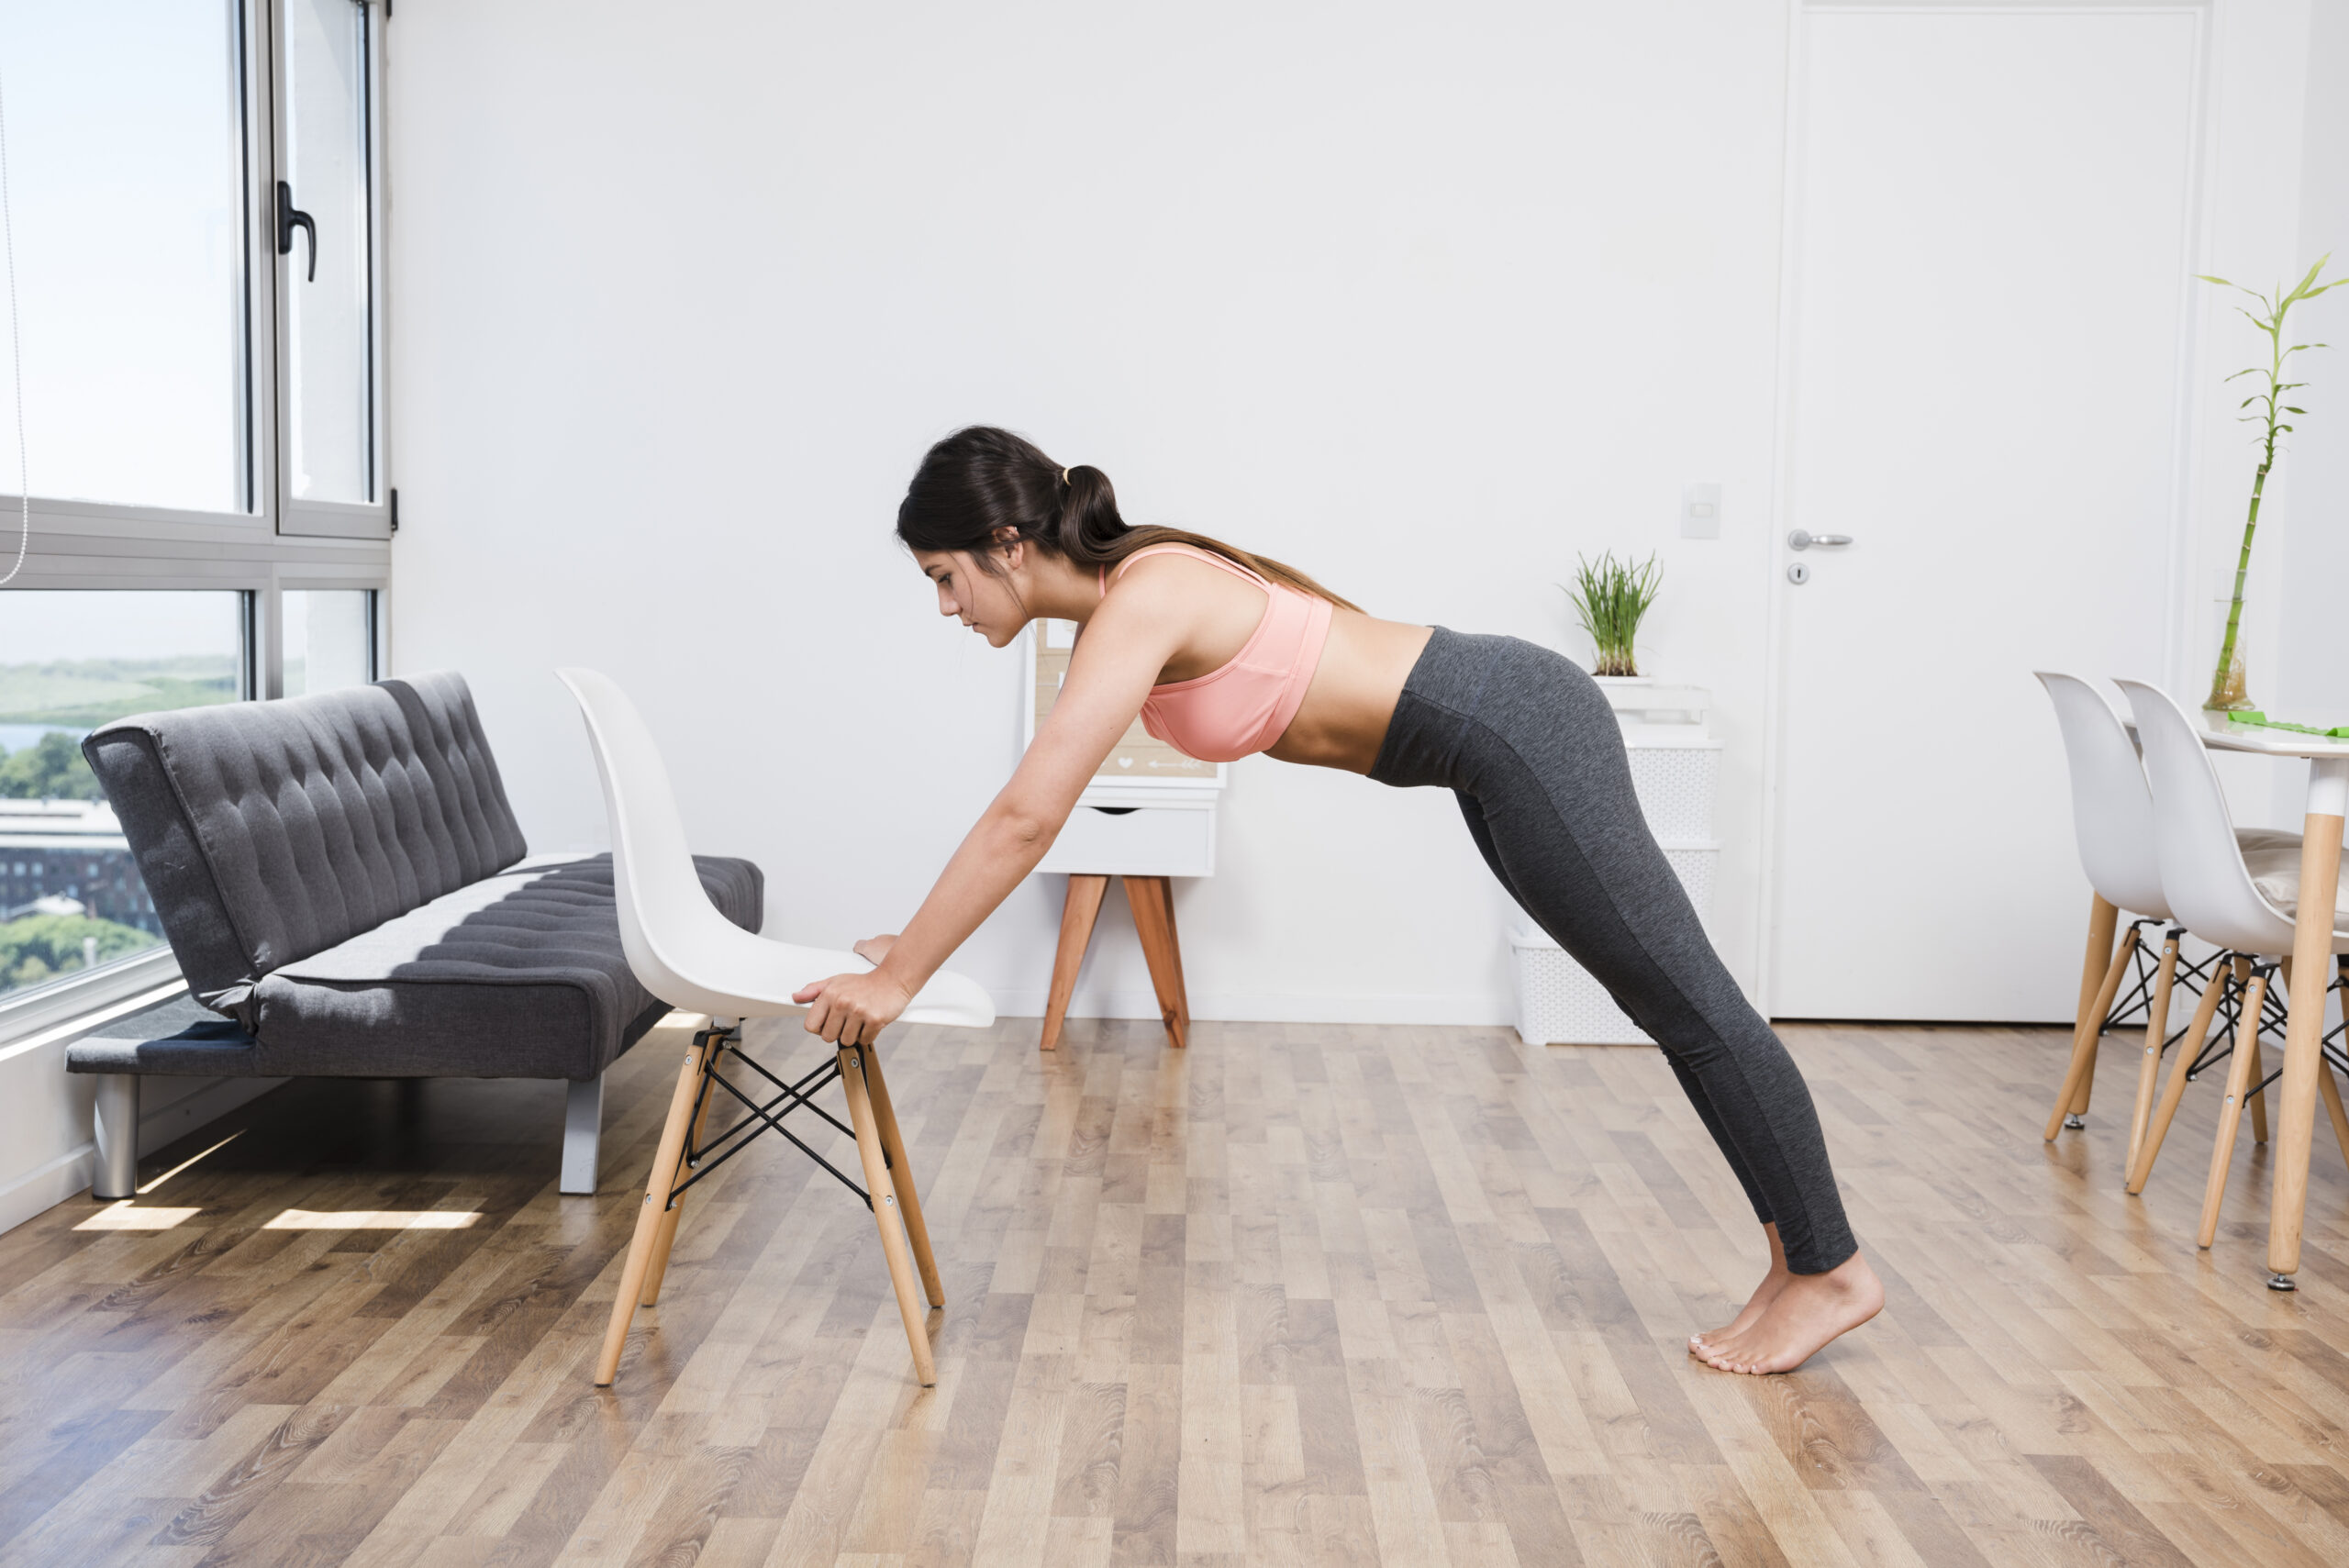 Benefits of Chair Yoga